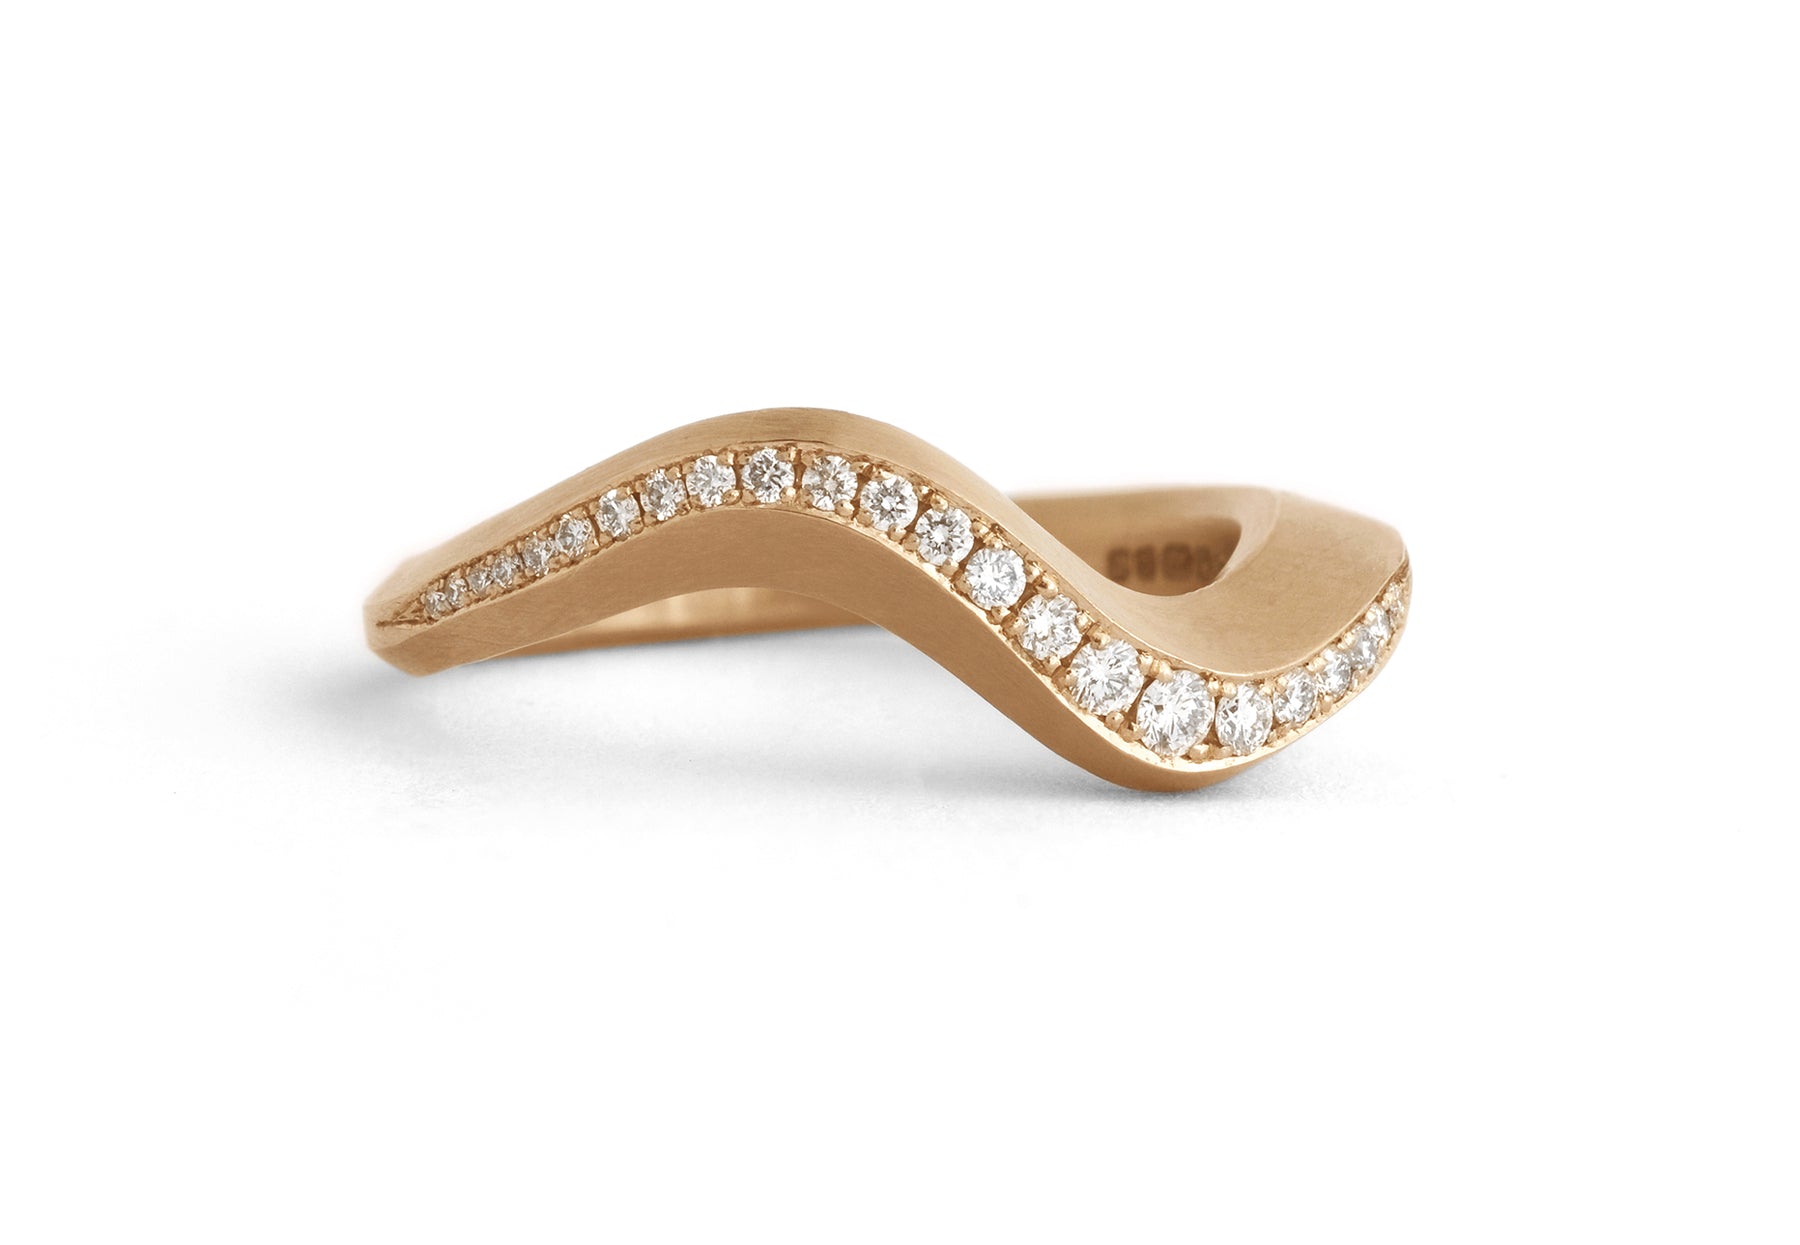 Arris carved white diamond pave set yellow gold wedding ring